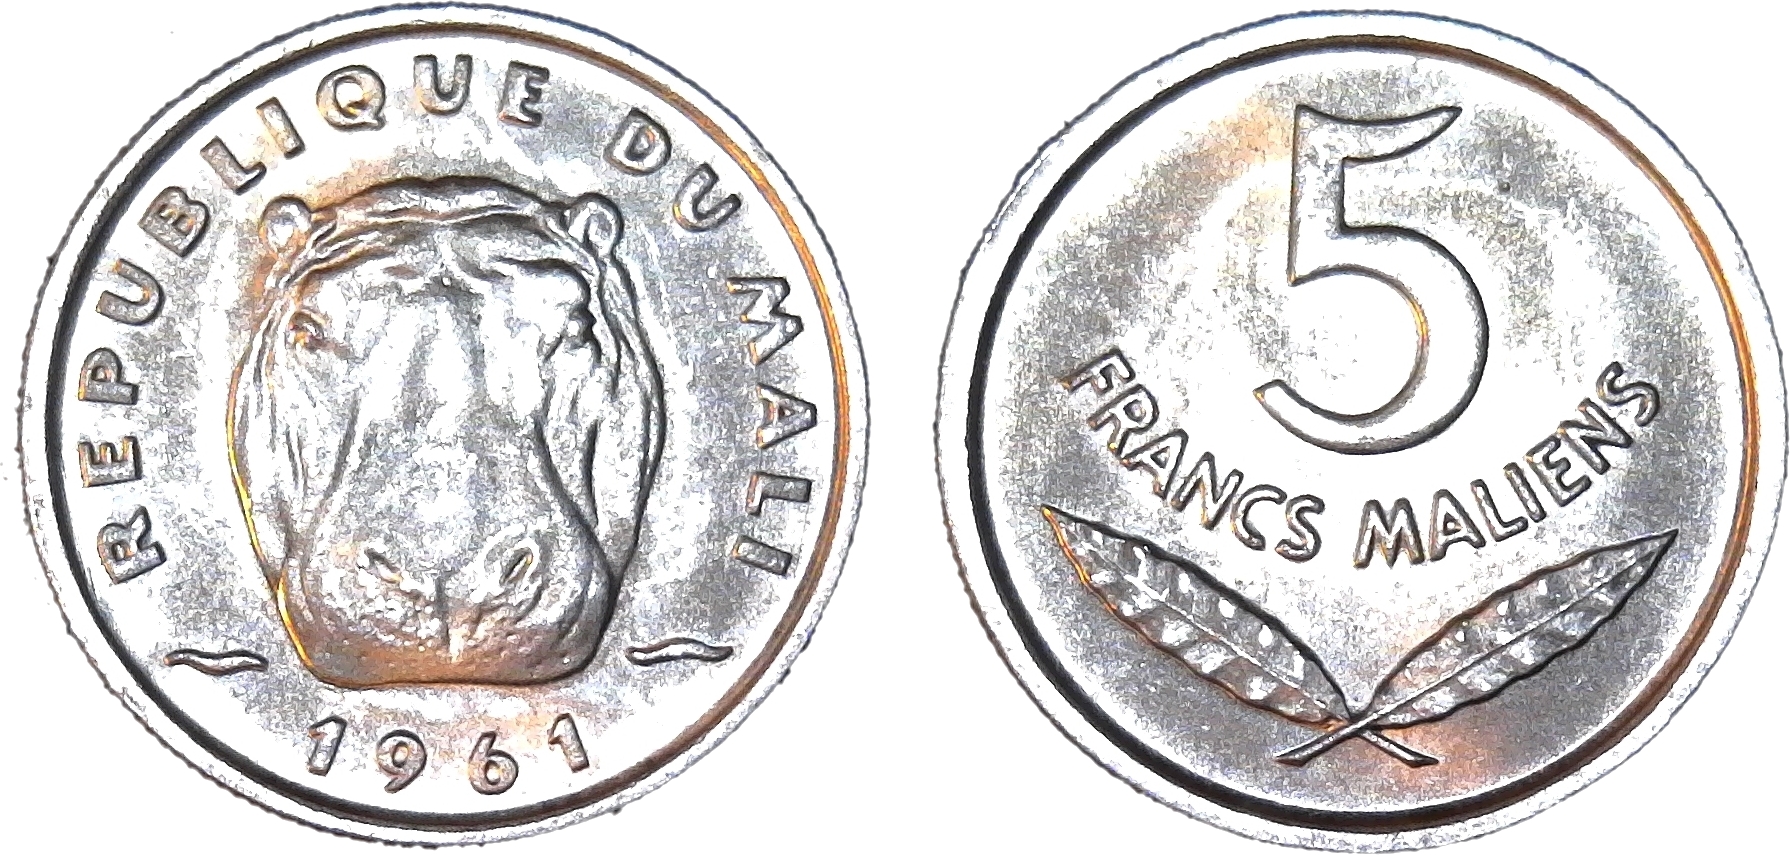 Mali 5 Francs 1961 obverse-side-cutout.jpg